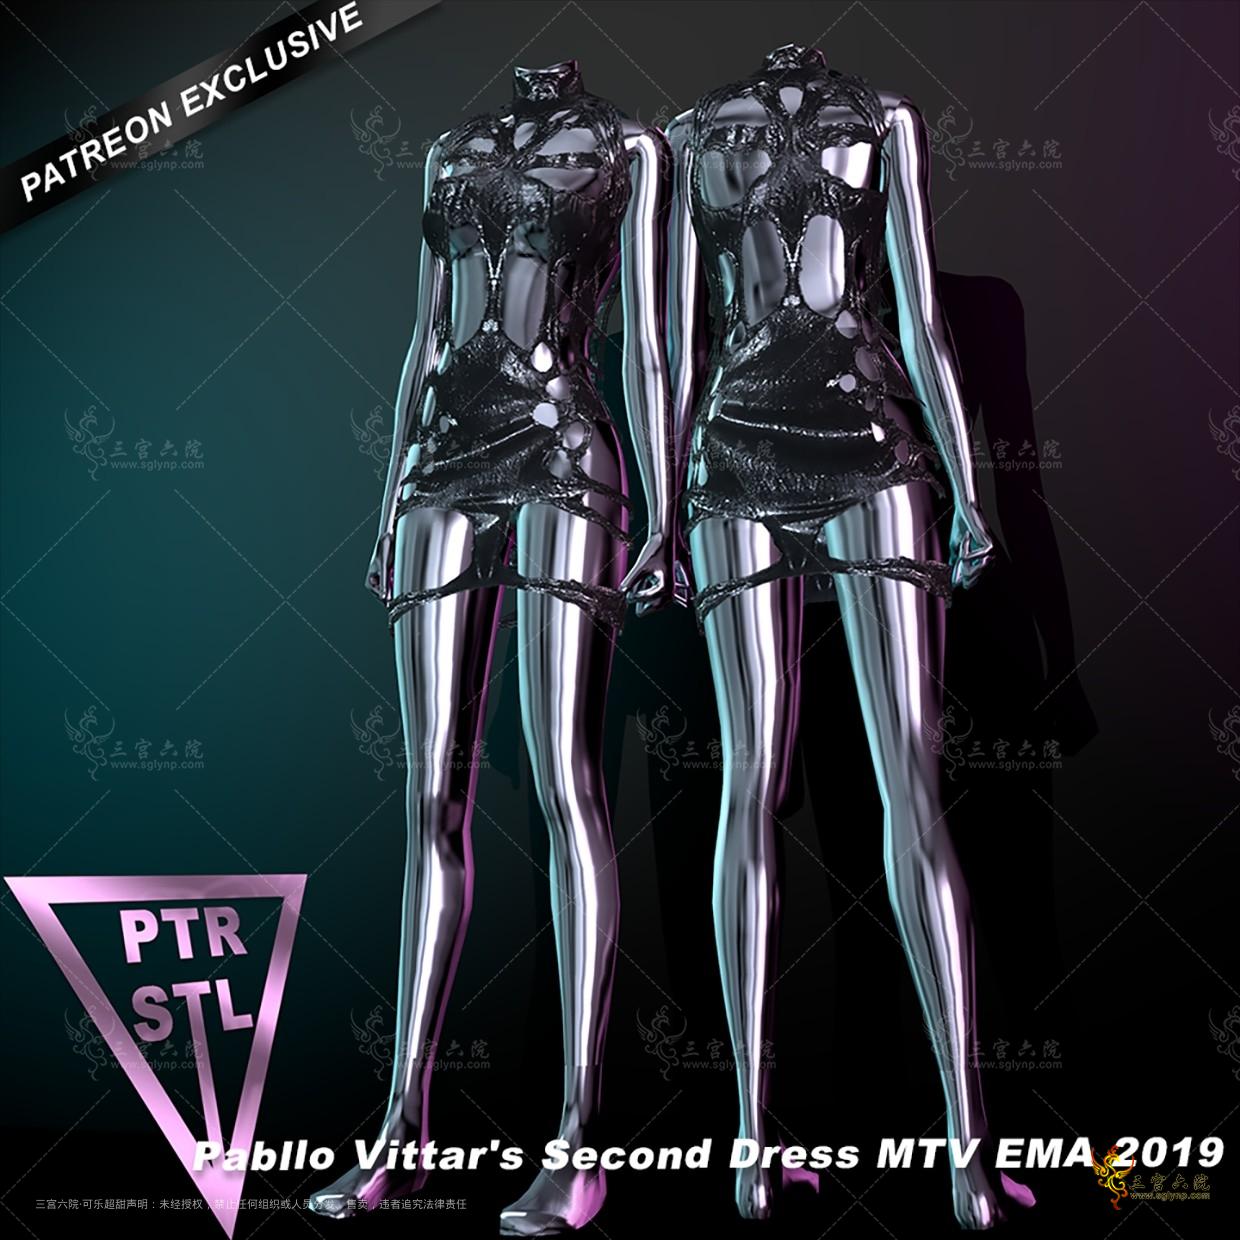 Pietro's Style Pabllo Vittar's Second Dress MTV EMA 2019.png